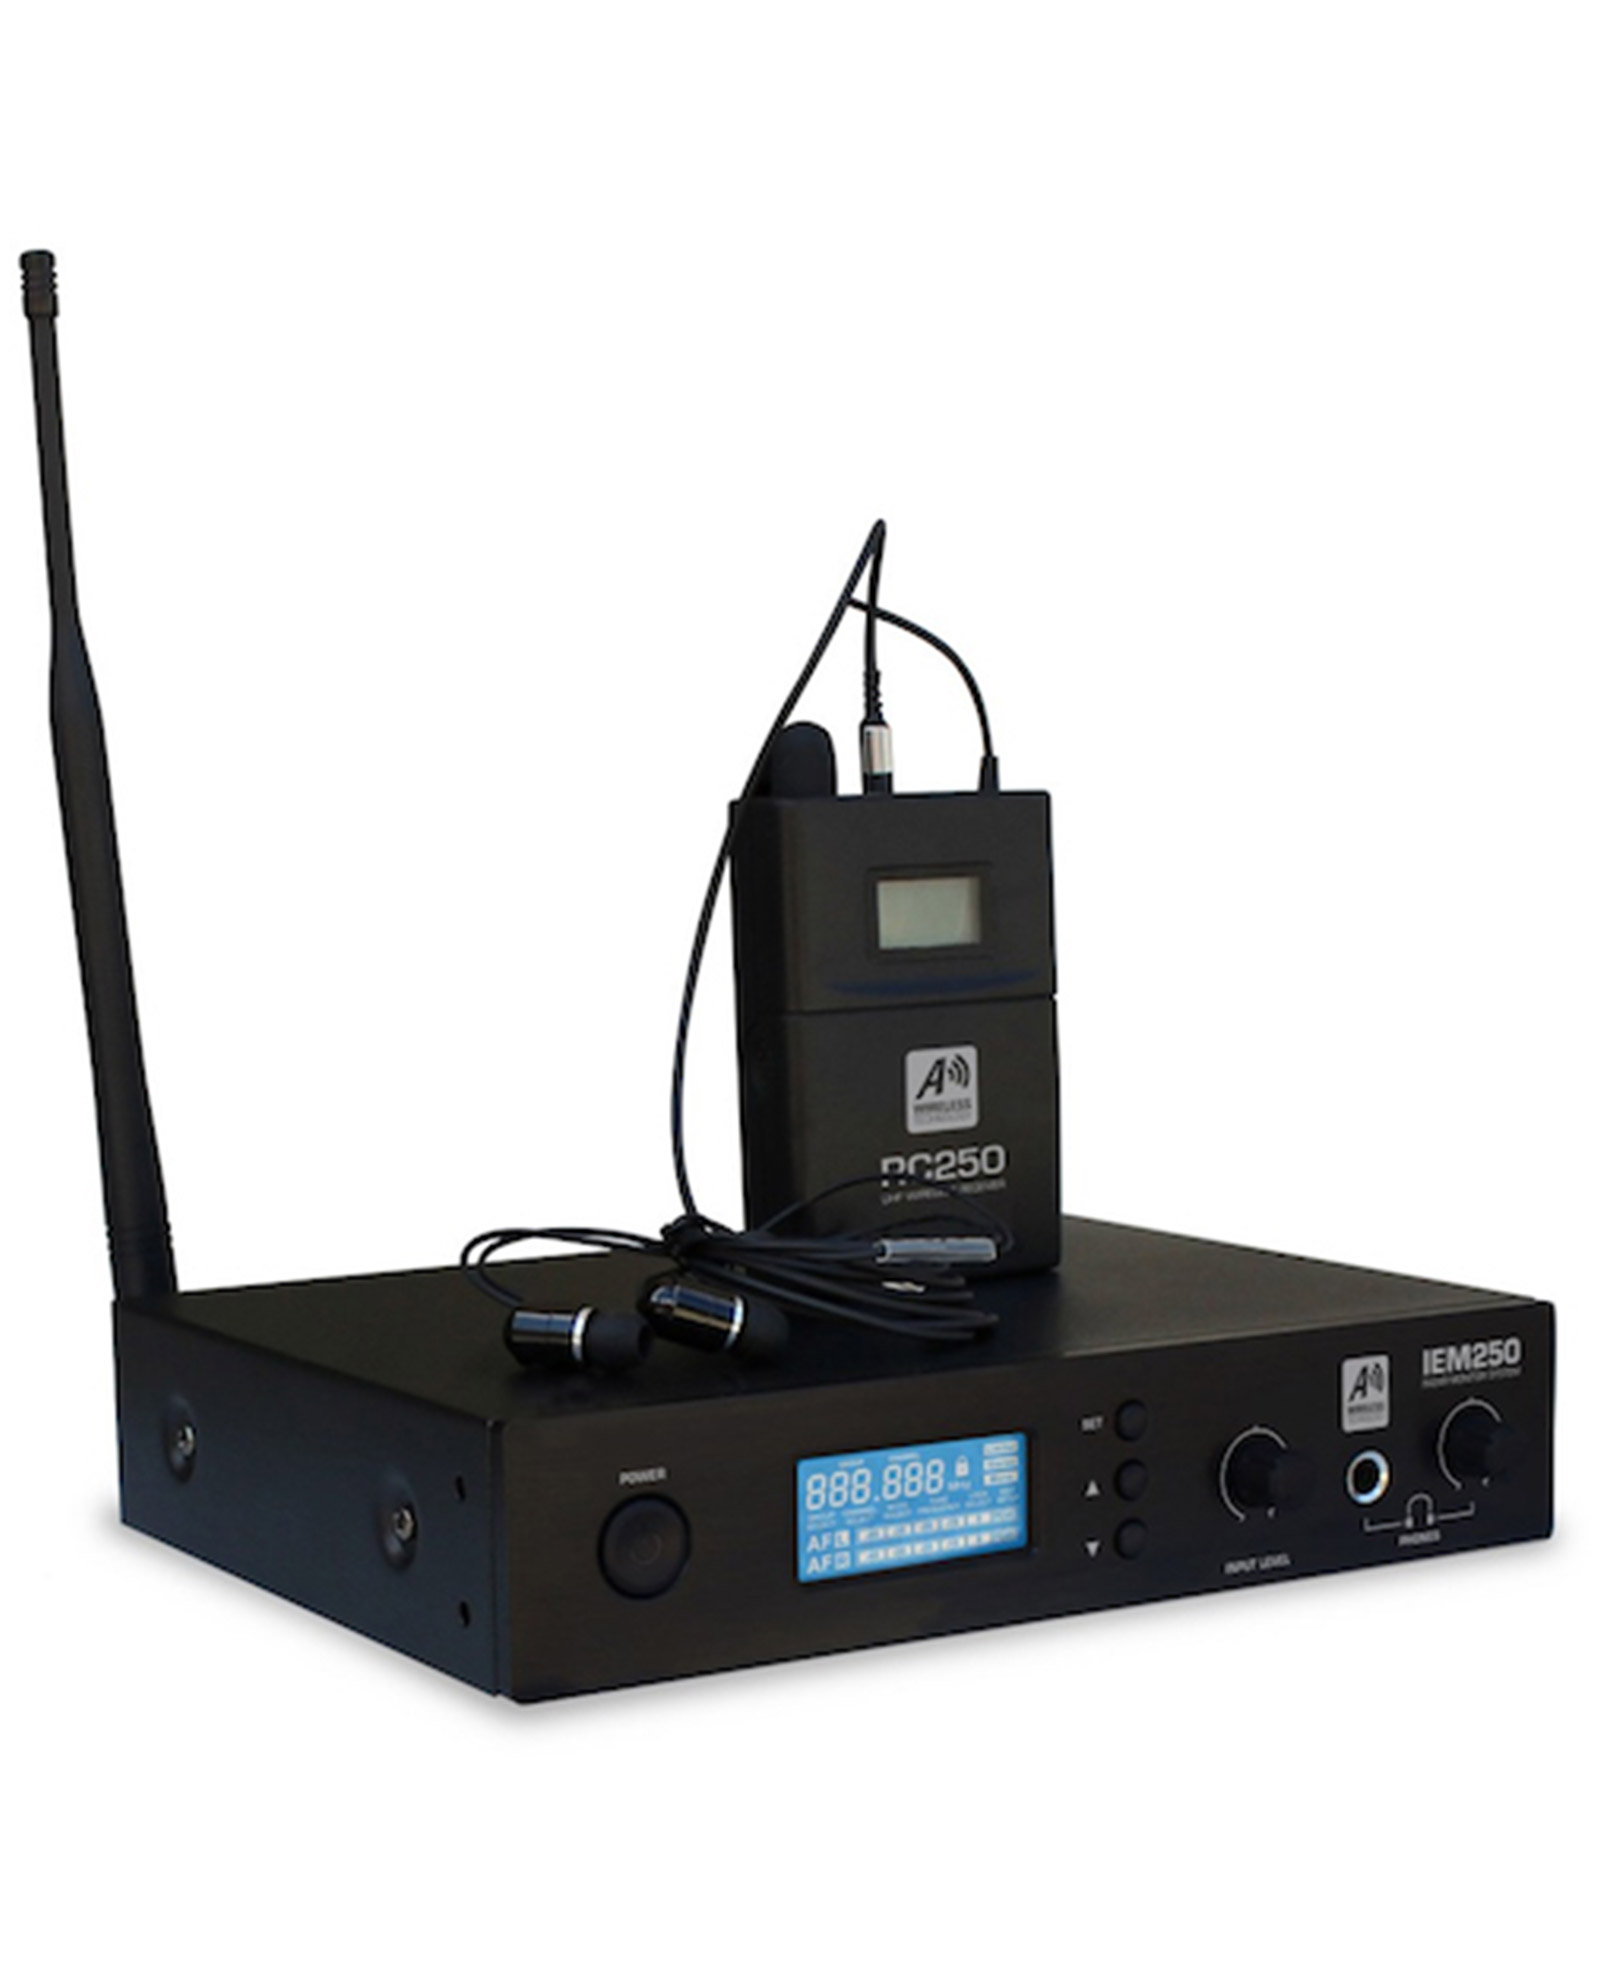 Ashton Iem250 Wireless In Ear Monitoring System